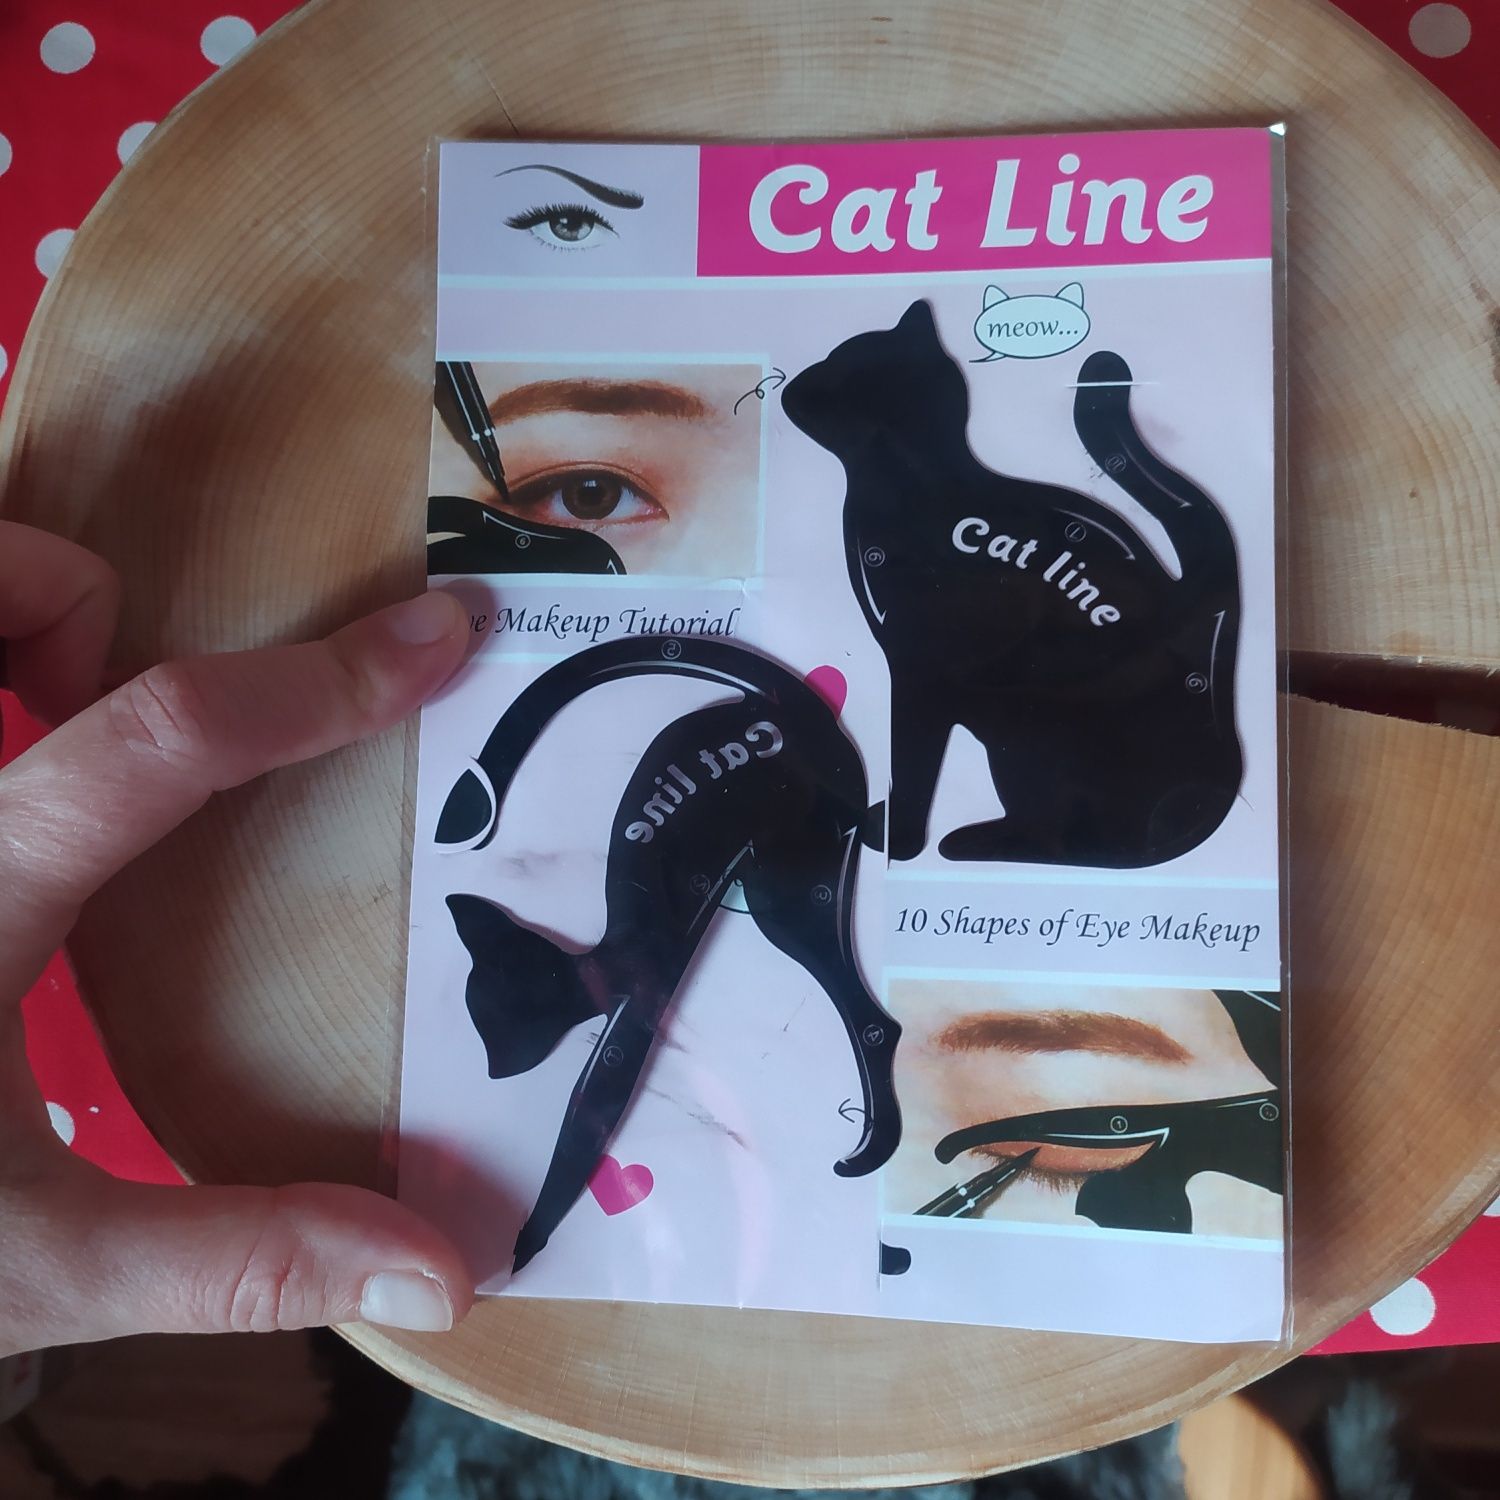 Cat line szablon do malowania kresek eyeliner